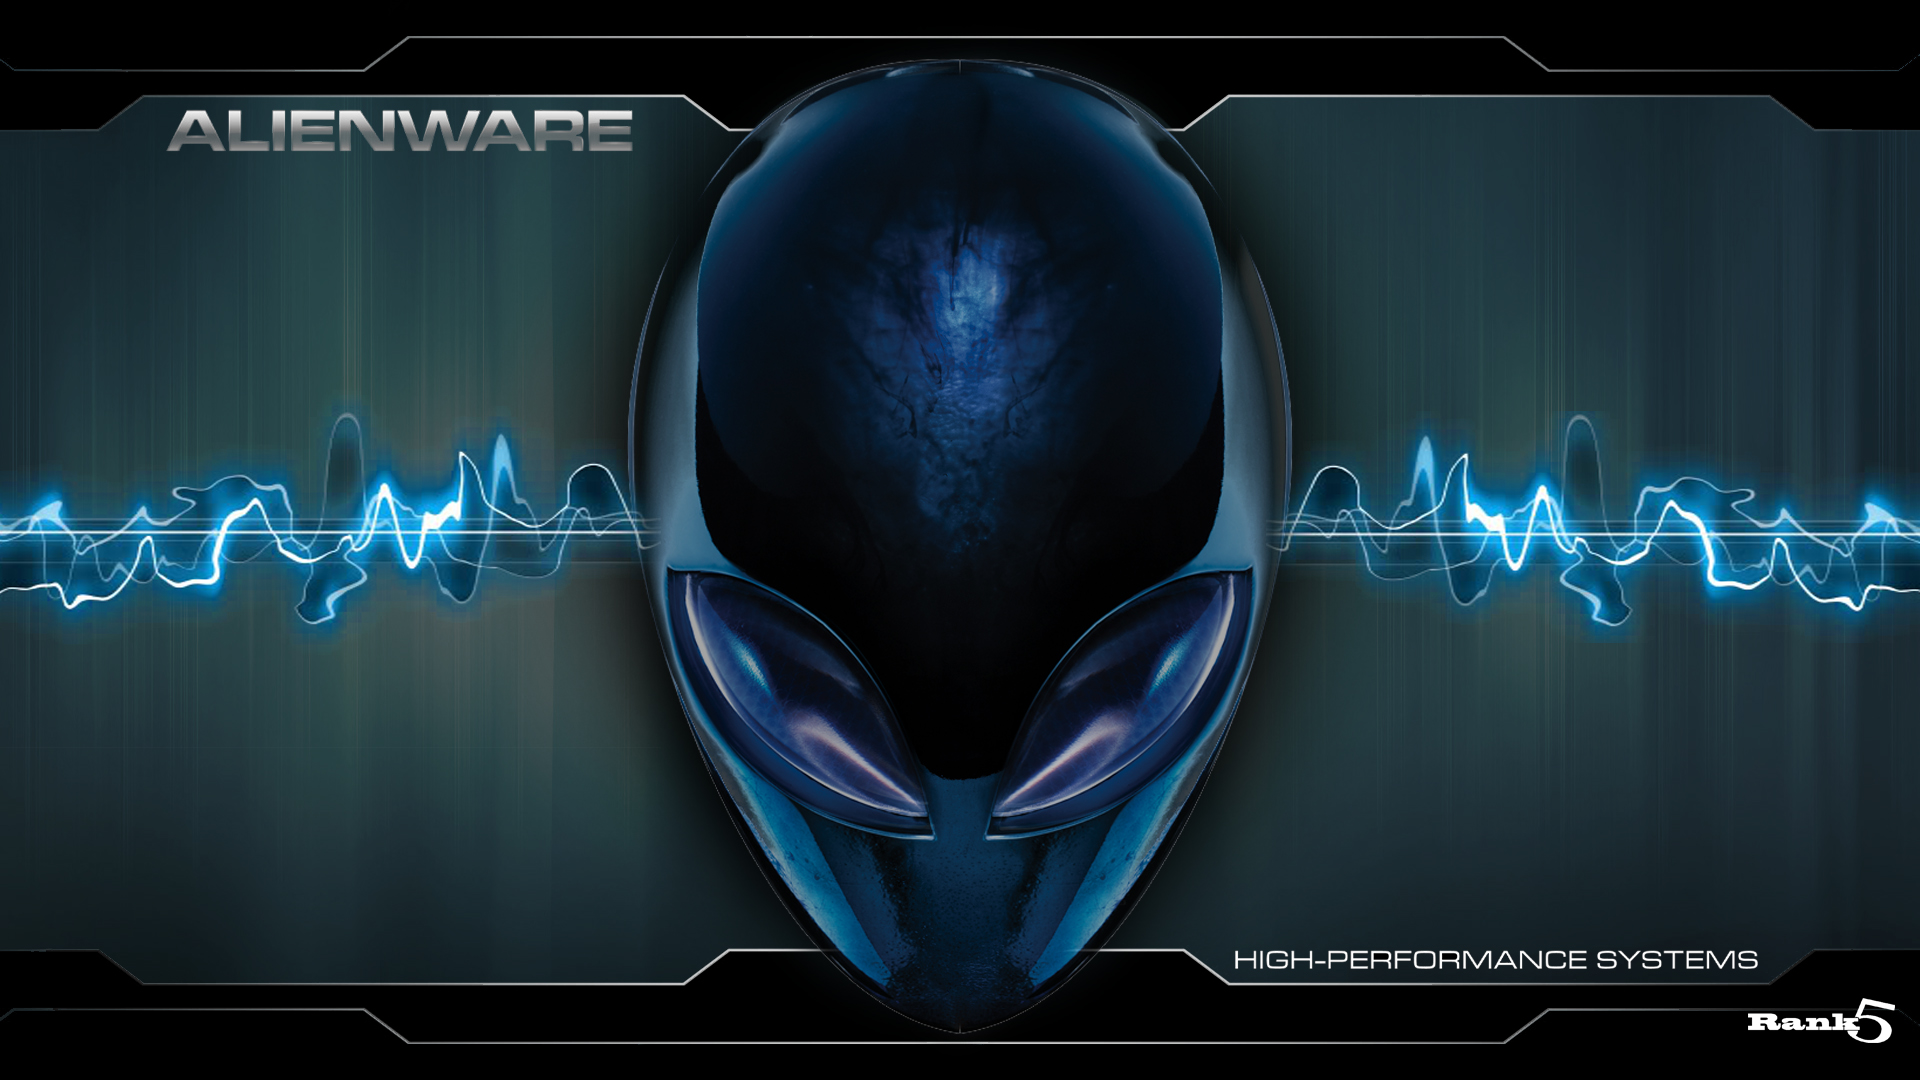 carta da parati alienware blu,casco,modellazione 3d,blu elettrico,font,bocca